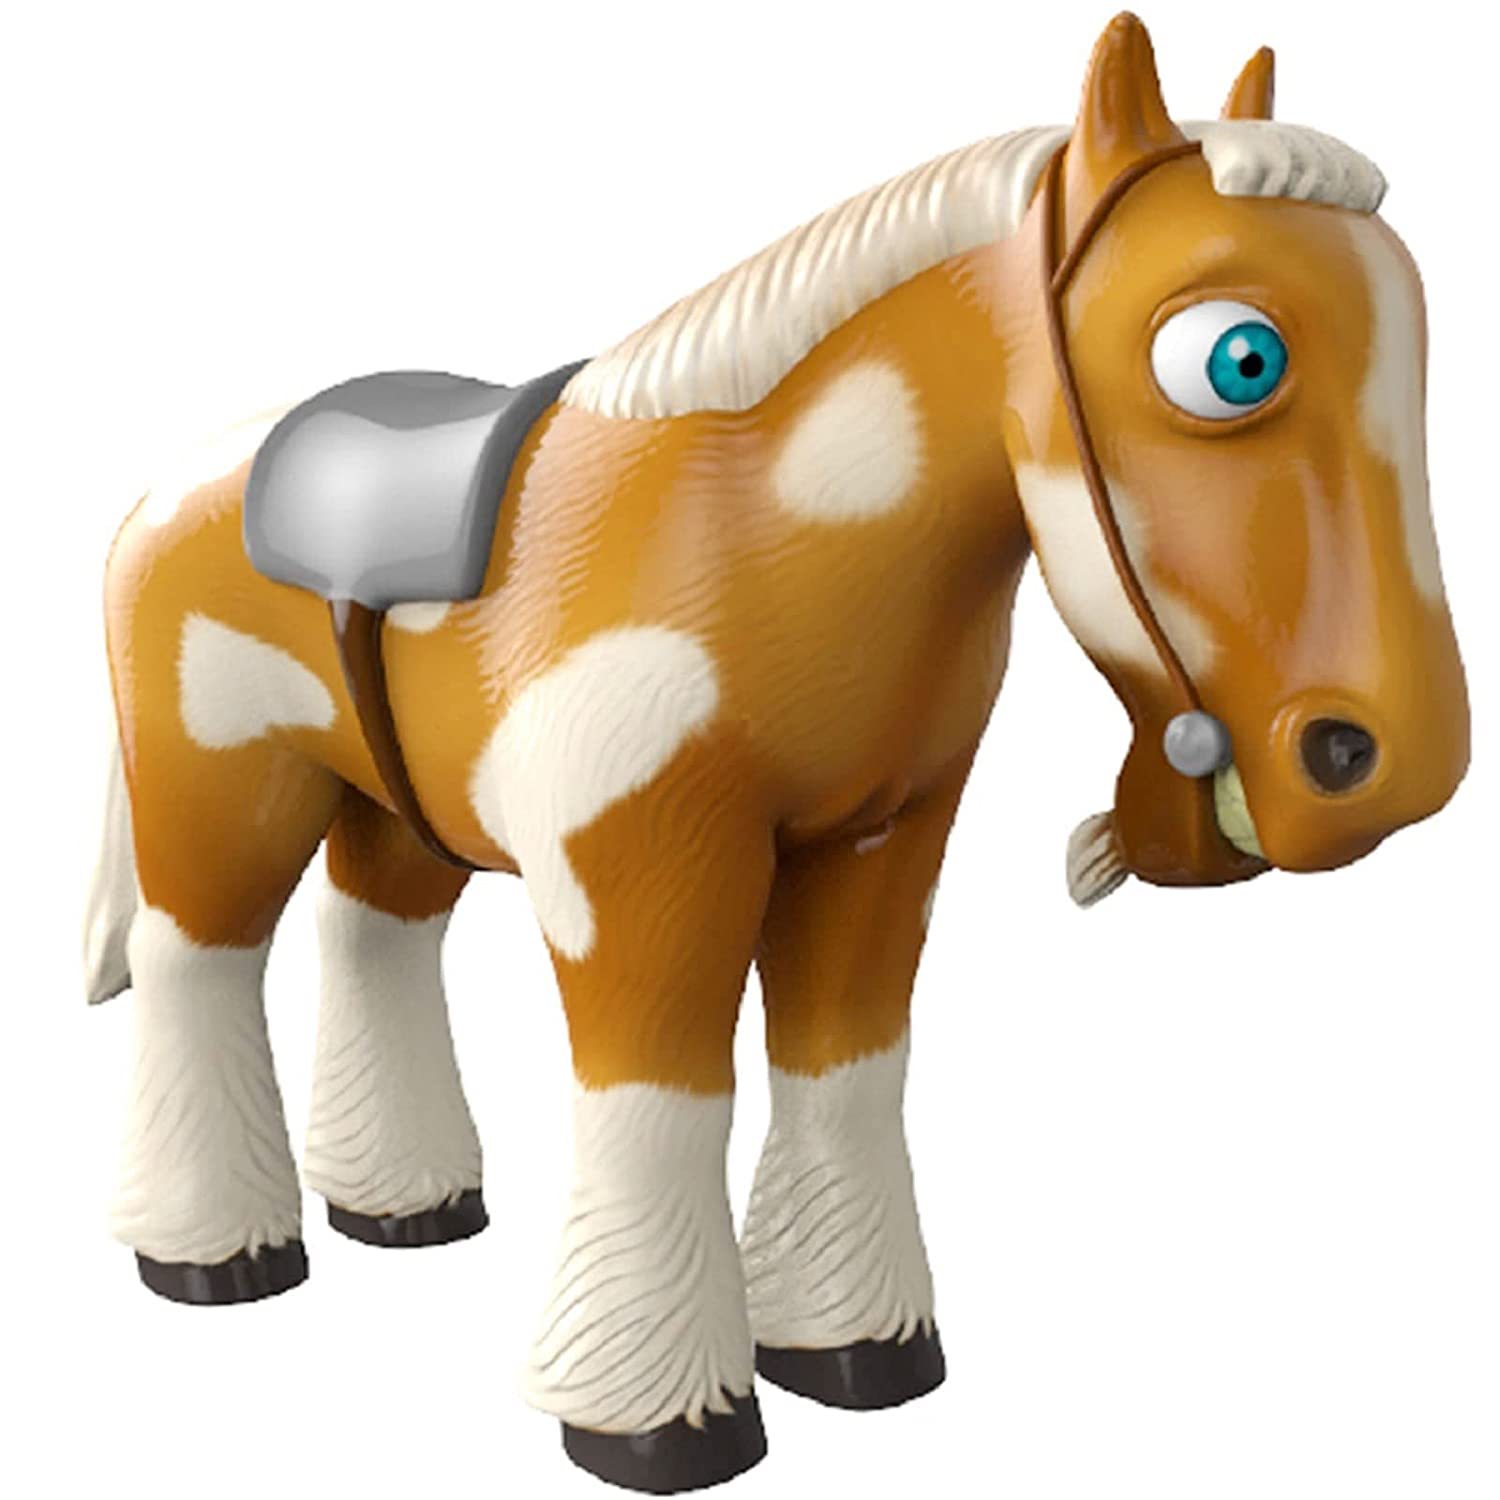 La Granja De Zenon Farm Toys Caballo Percheron Stuffed PVC Animal Plush Horse To